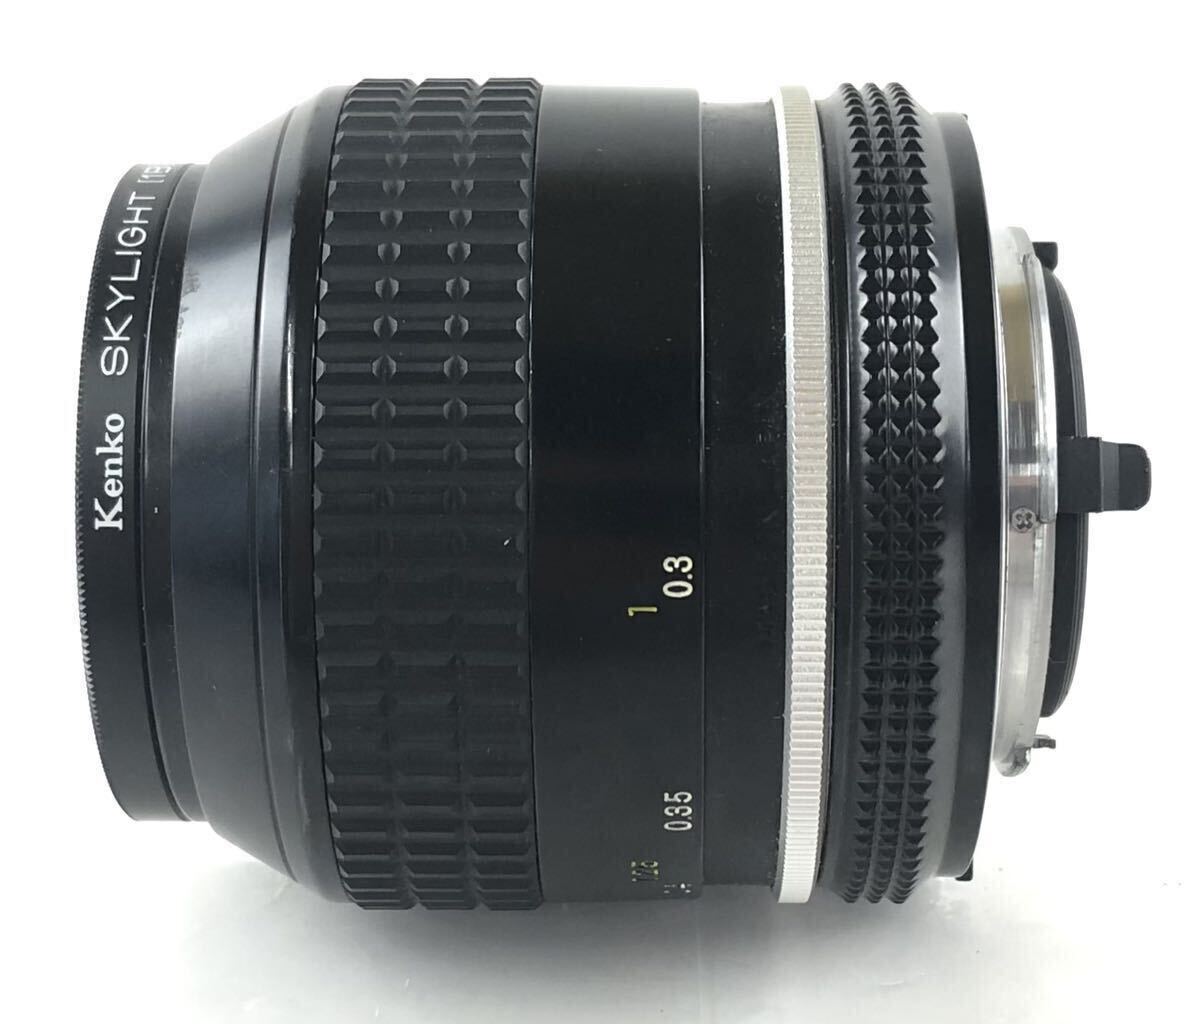 [SR290]Nikon Nikon camera lens NIKKOR 35.1:1.4 403773 lens LENS large diameter lens single‐lens reflex camera camera soft case attaching 